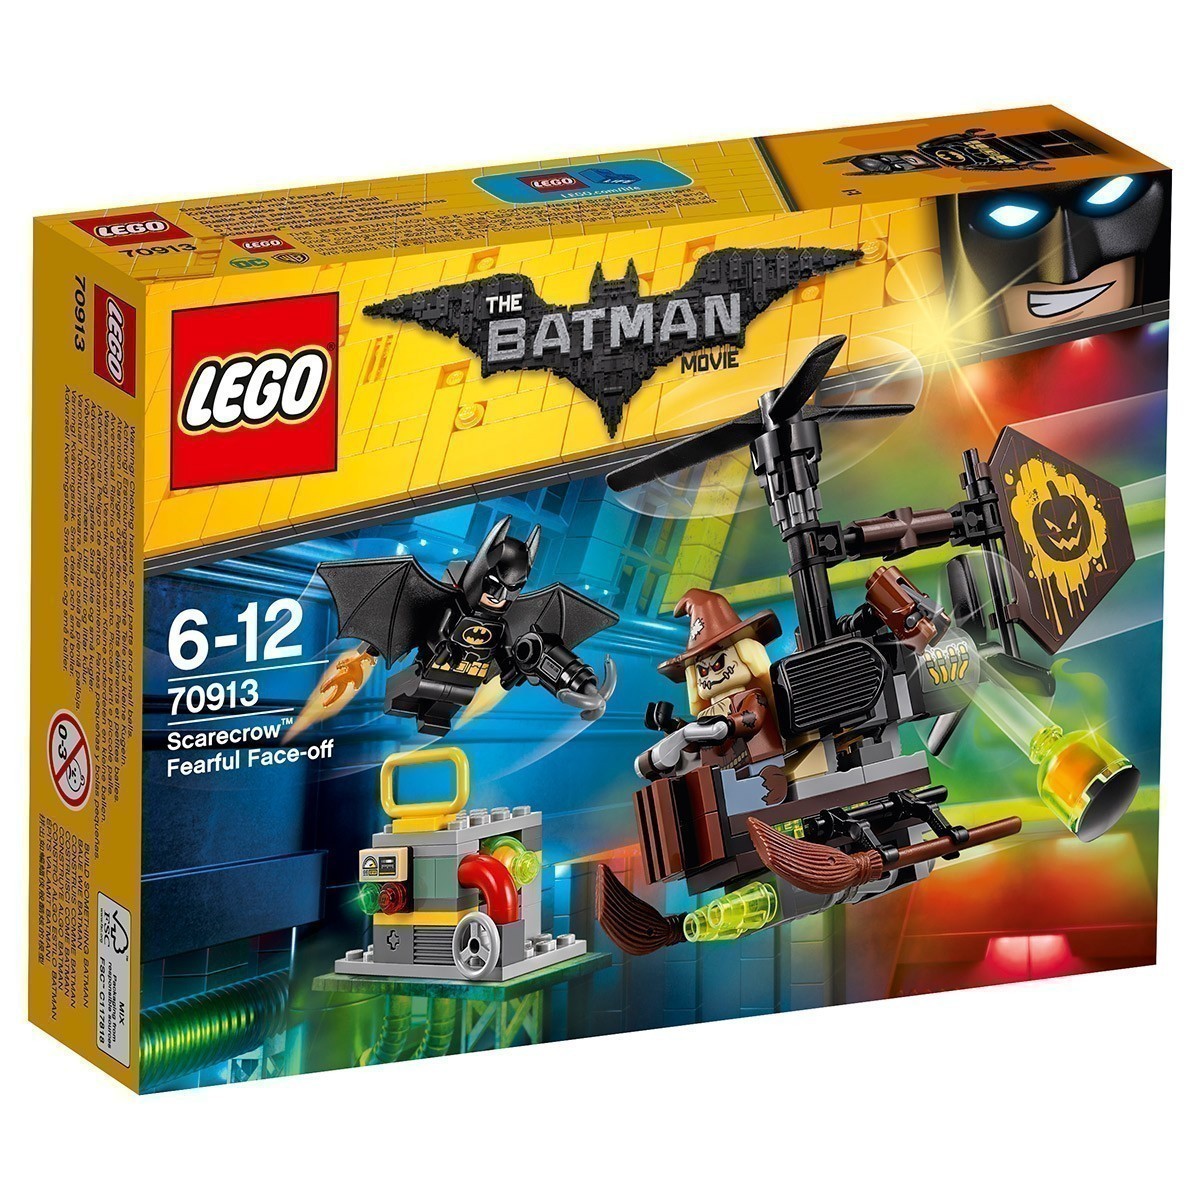 LEGO - The Batman Movie - 70913 Scarecrow Fearful Face-Off